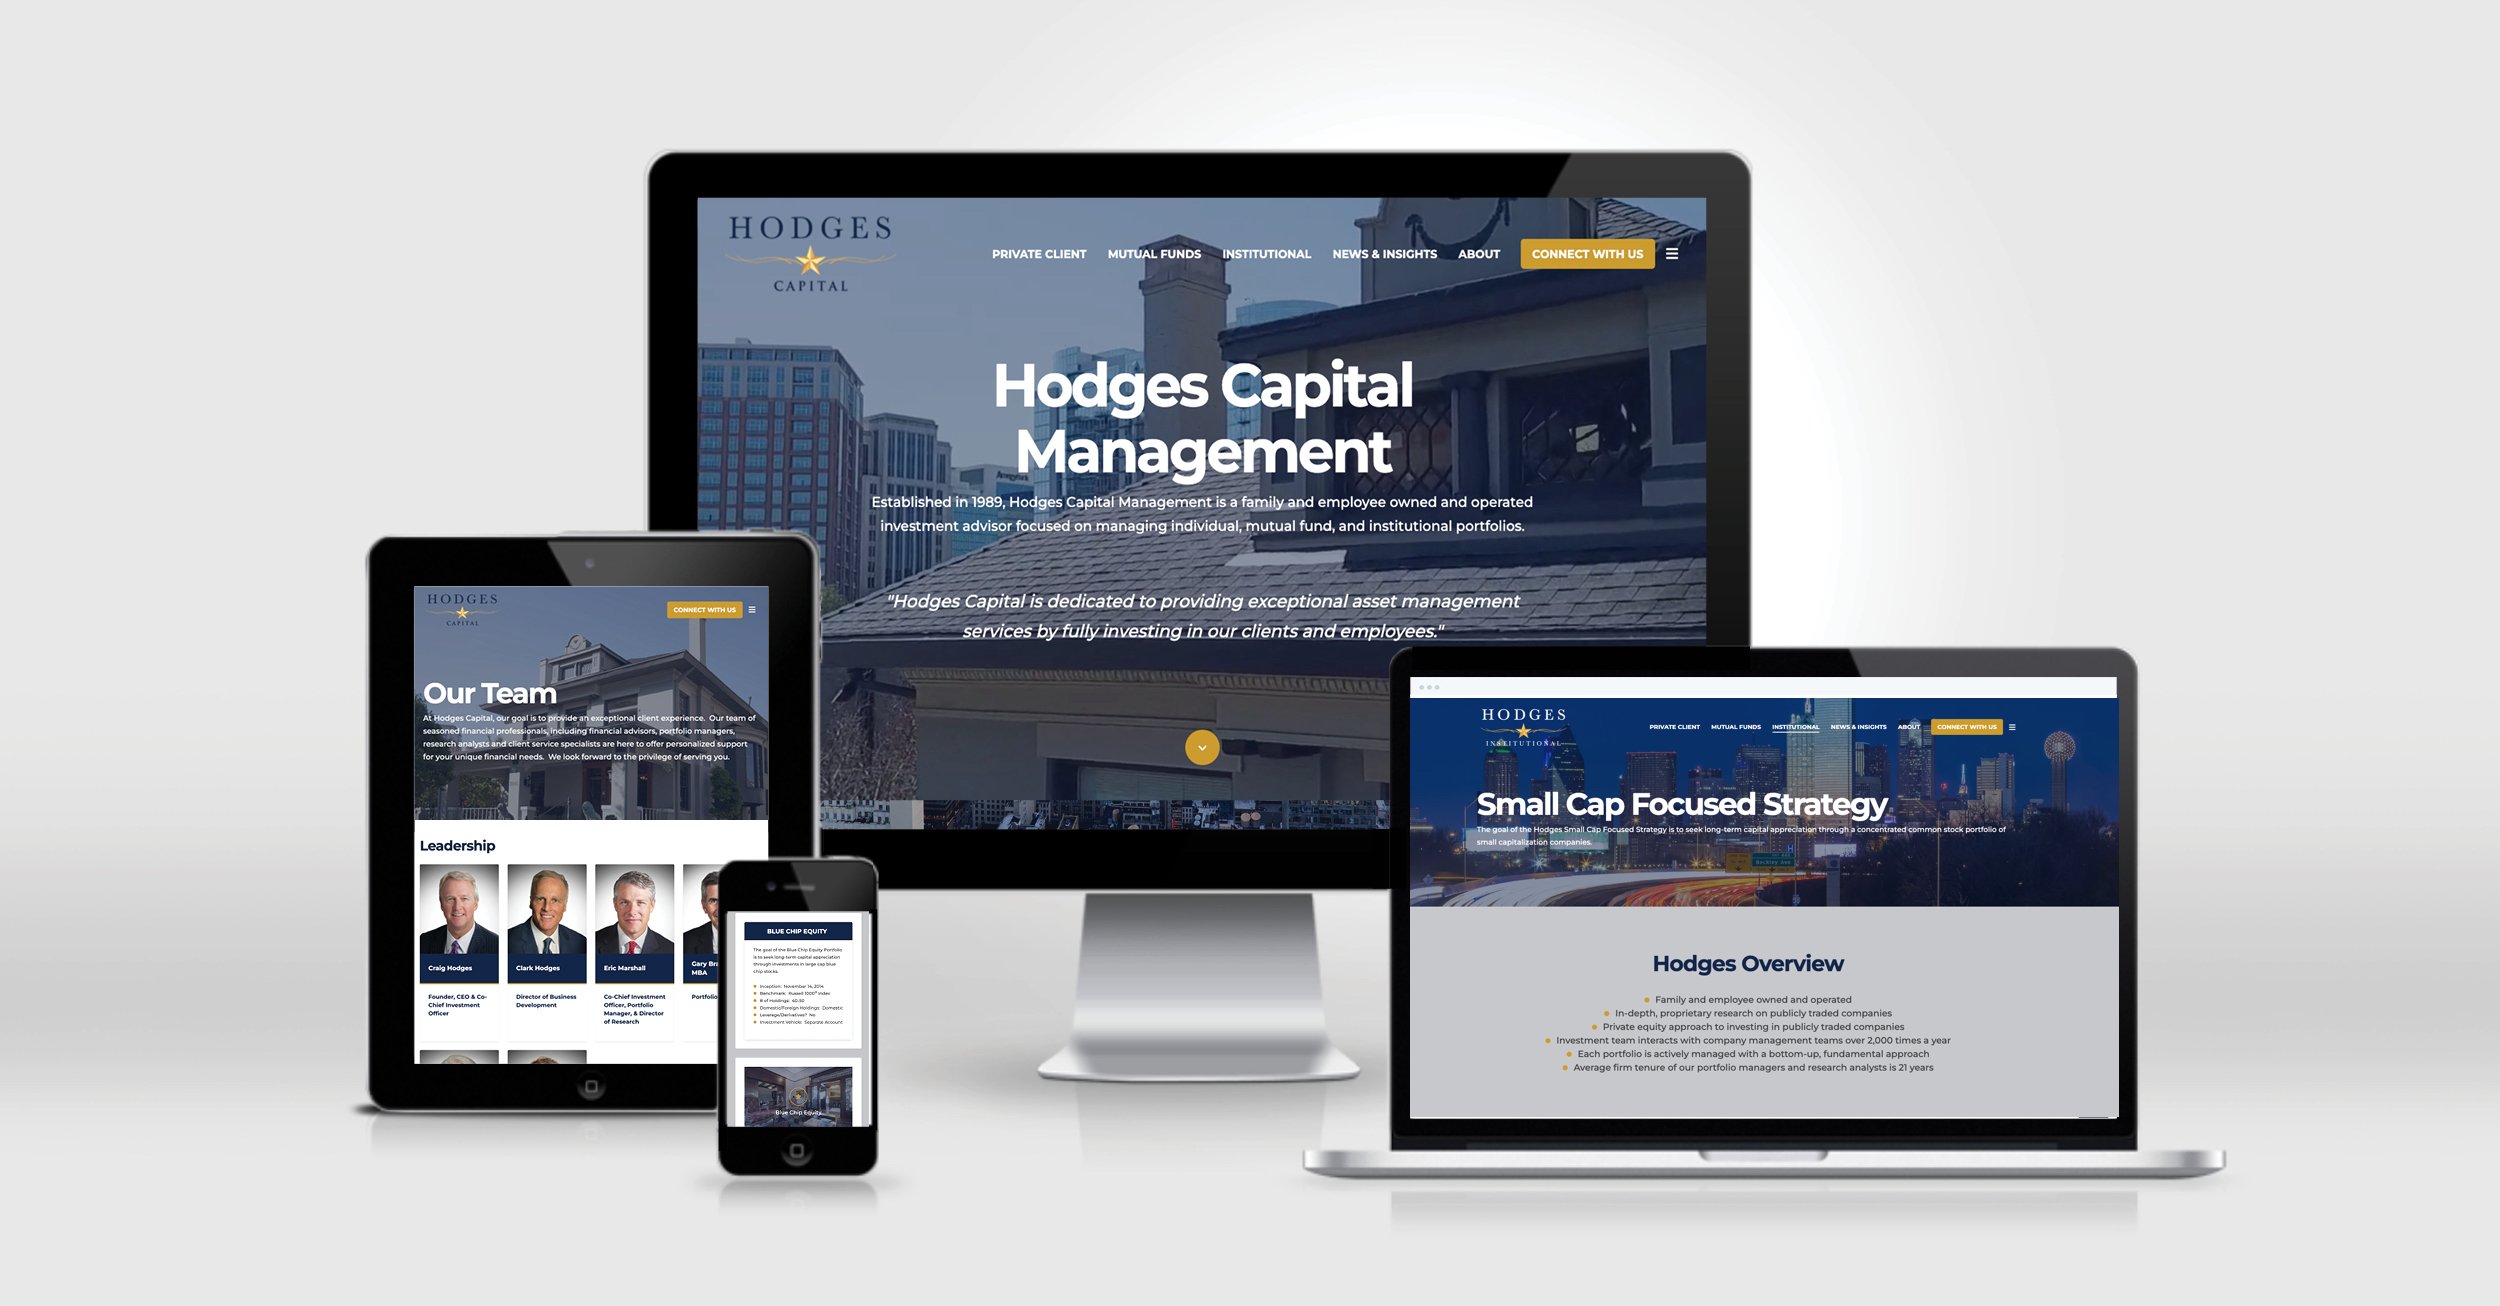 Announcing the New Hodges Capital Management Web Site